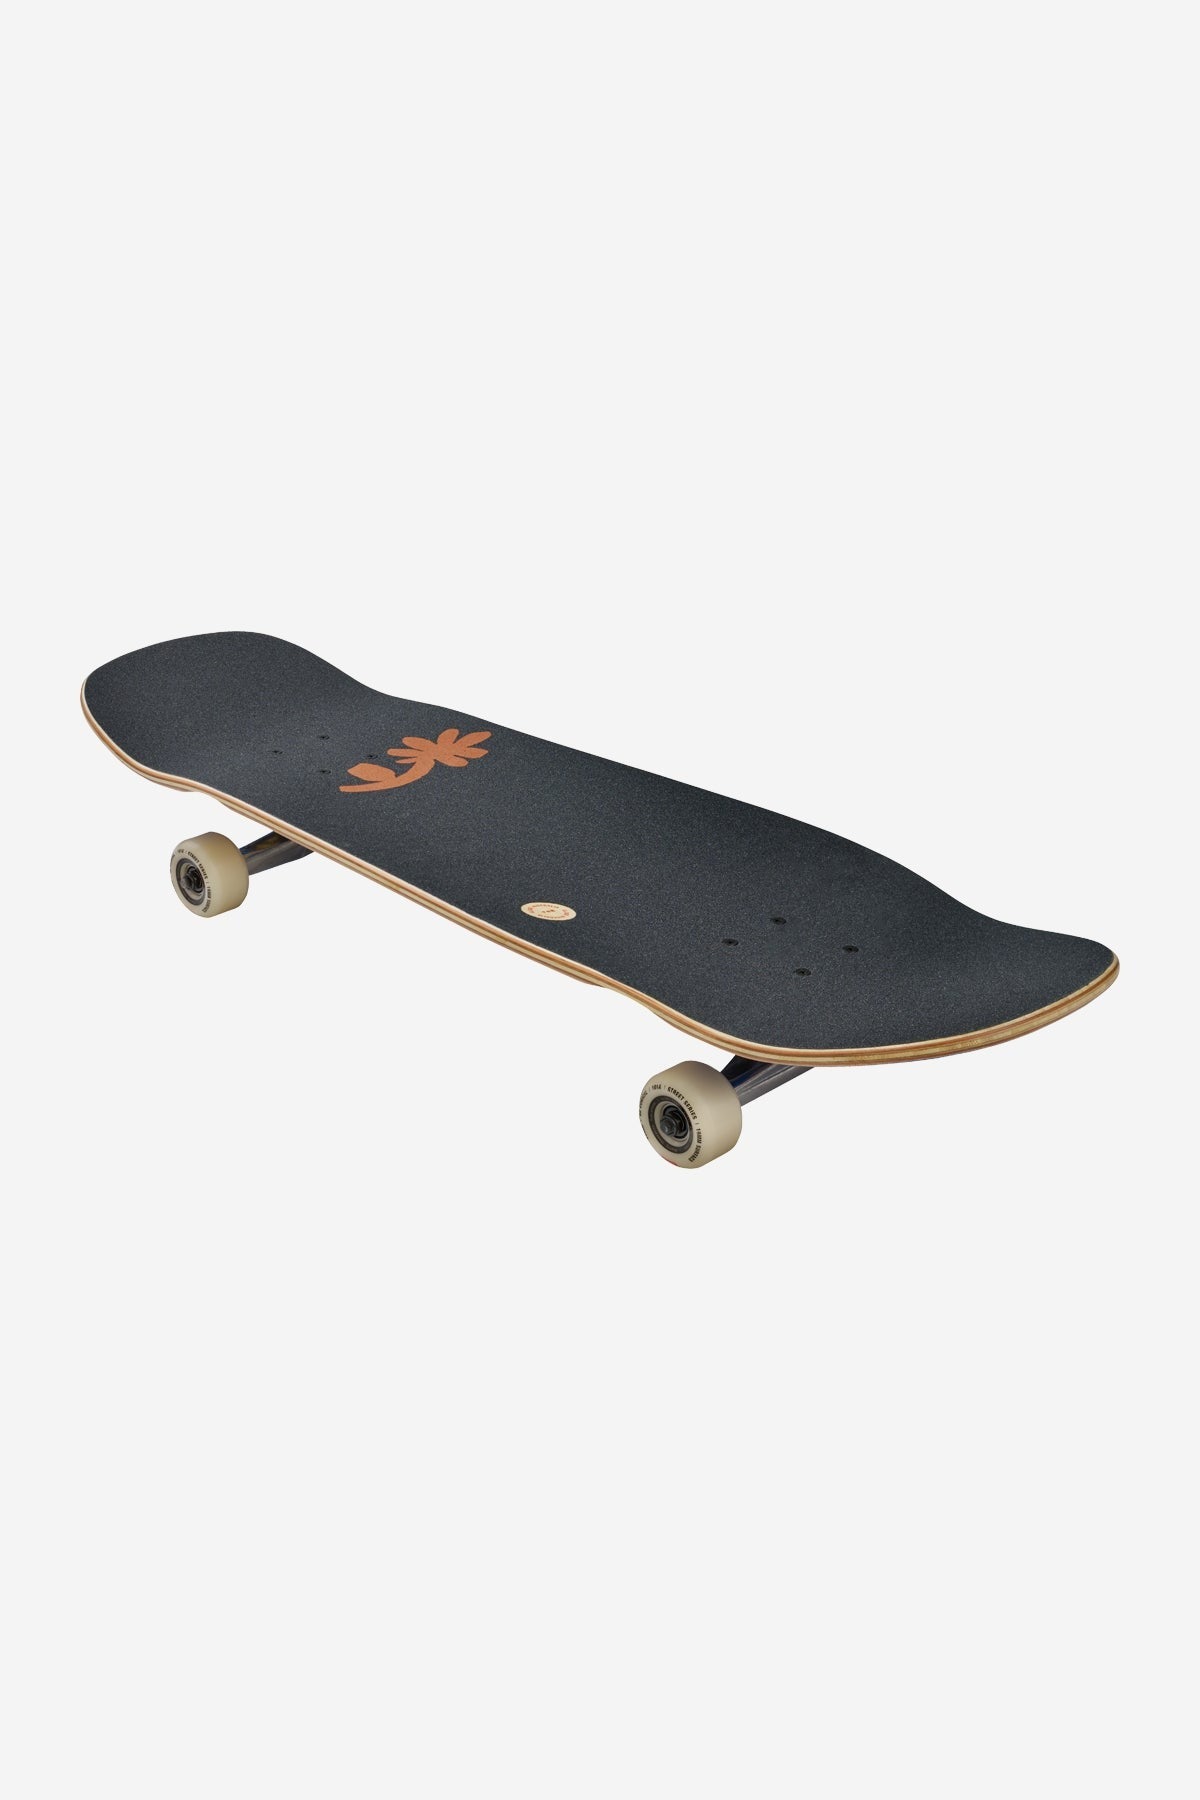 Huntsman 9.75" Complete Skateboard - Bamboo/Play